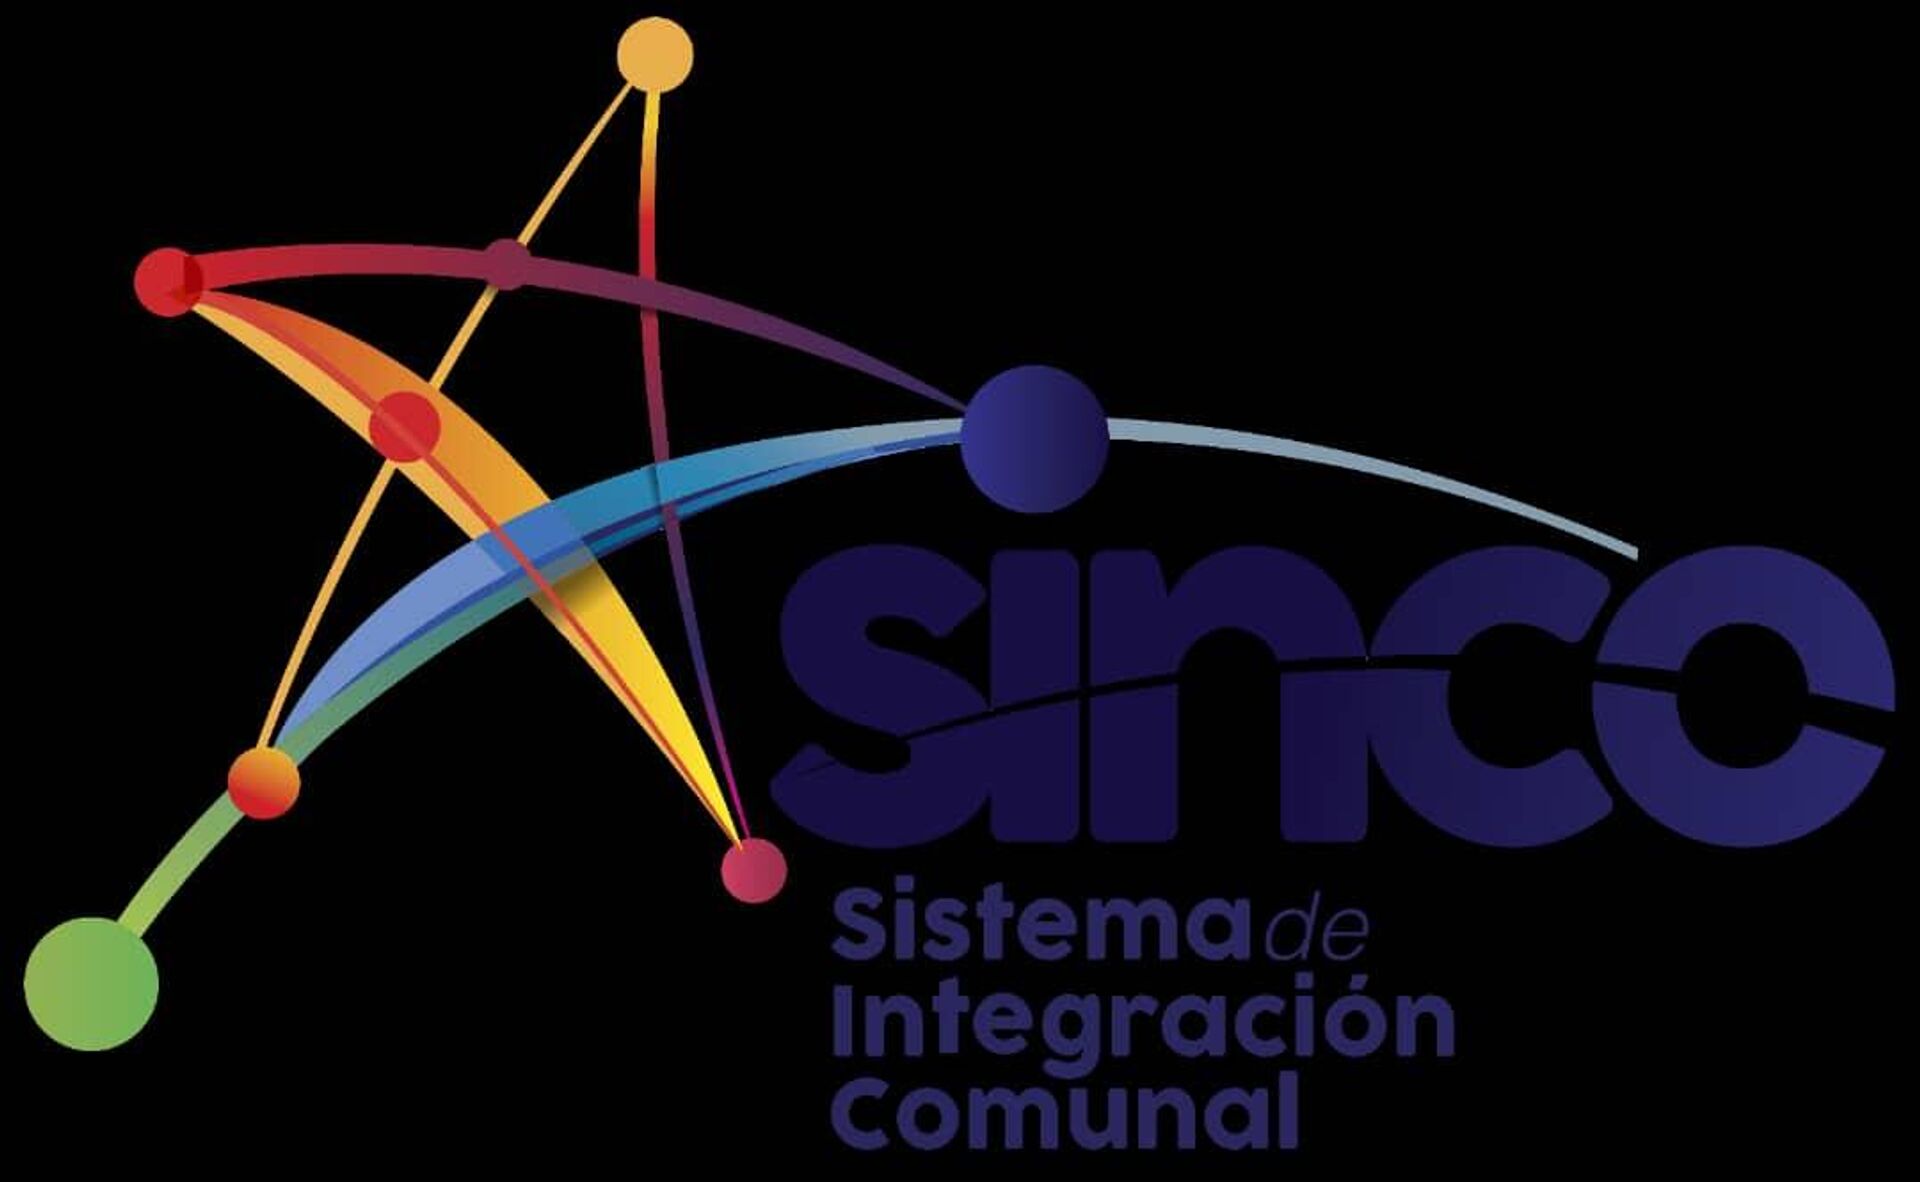 El logo del SINCO - Sputnik Mundo, 1920, 15.04.2021